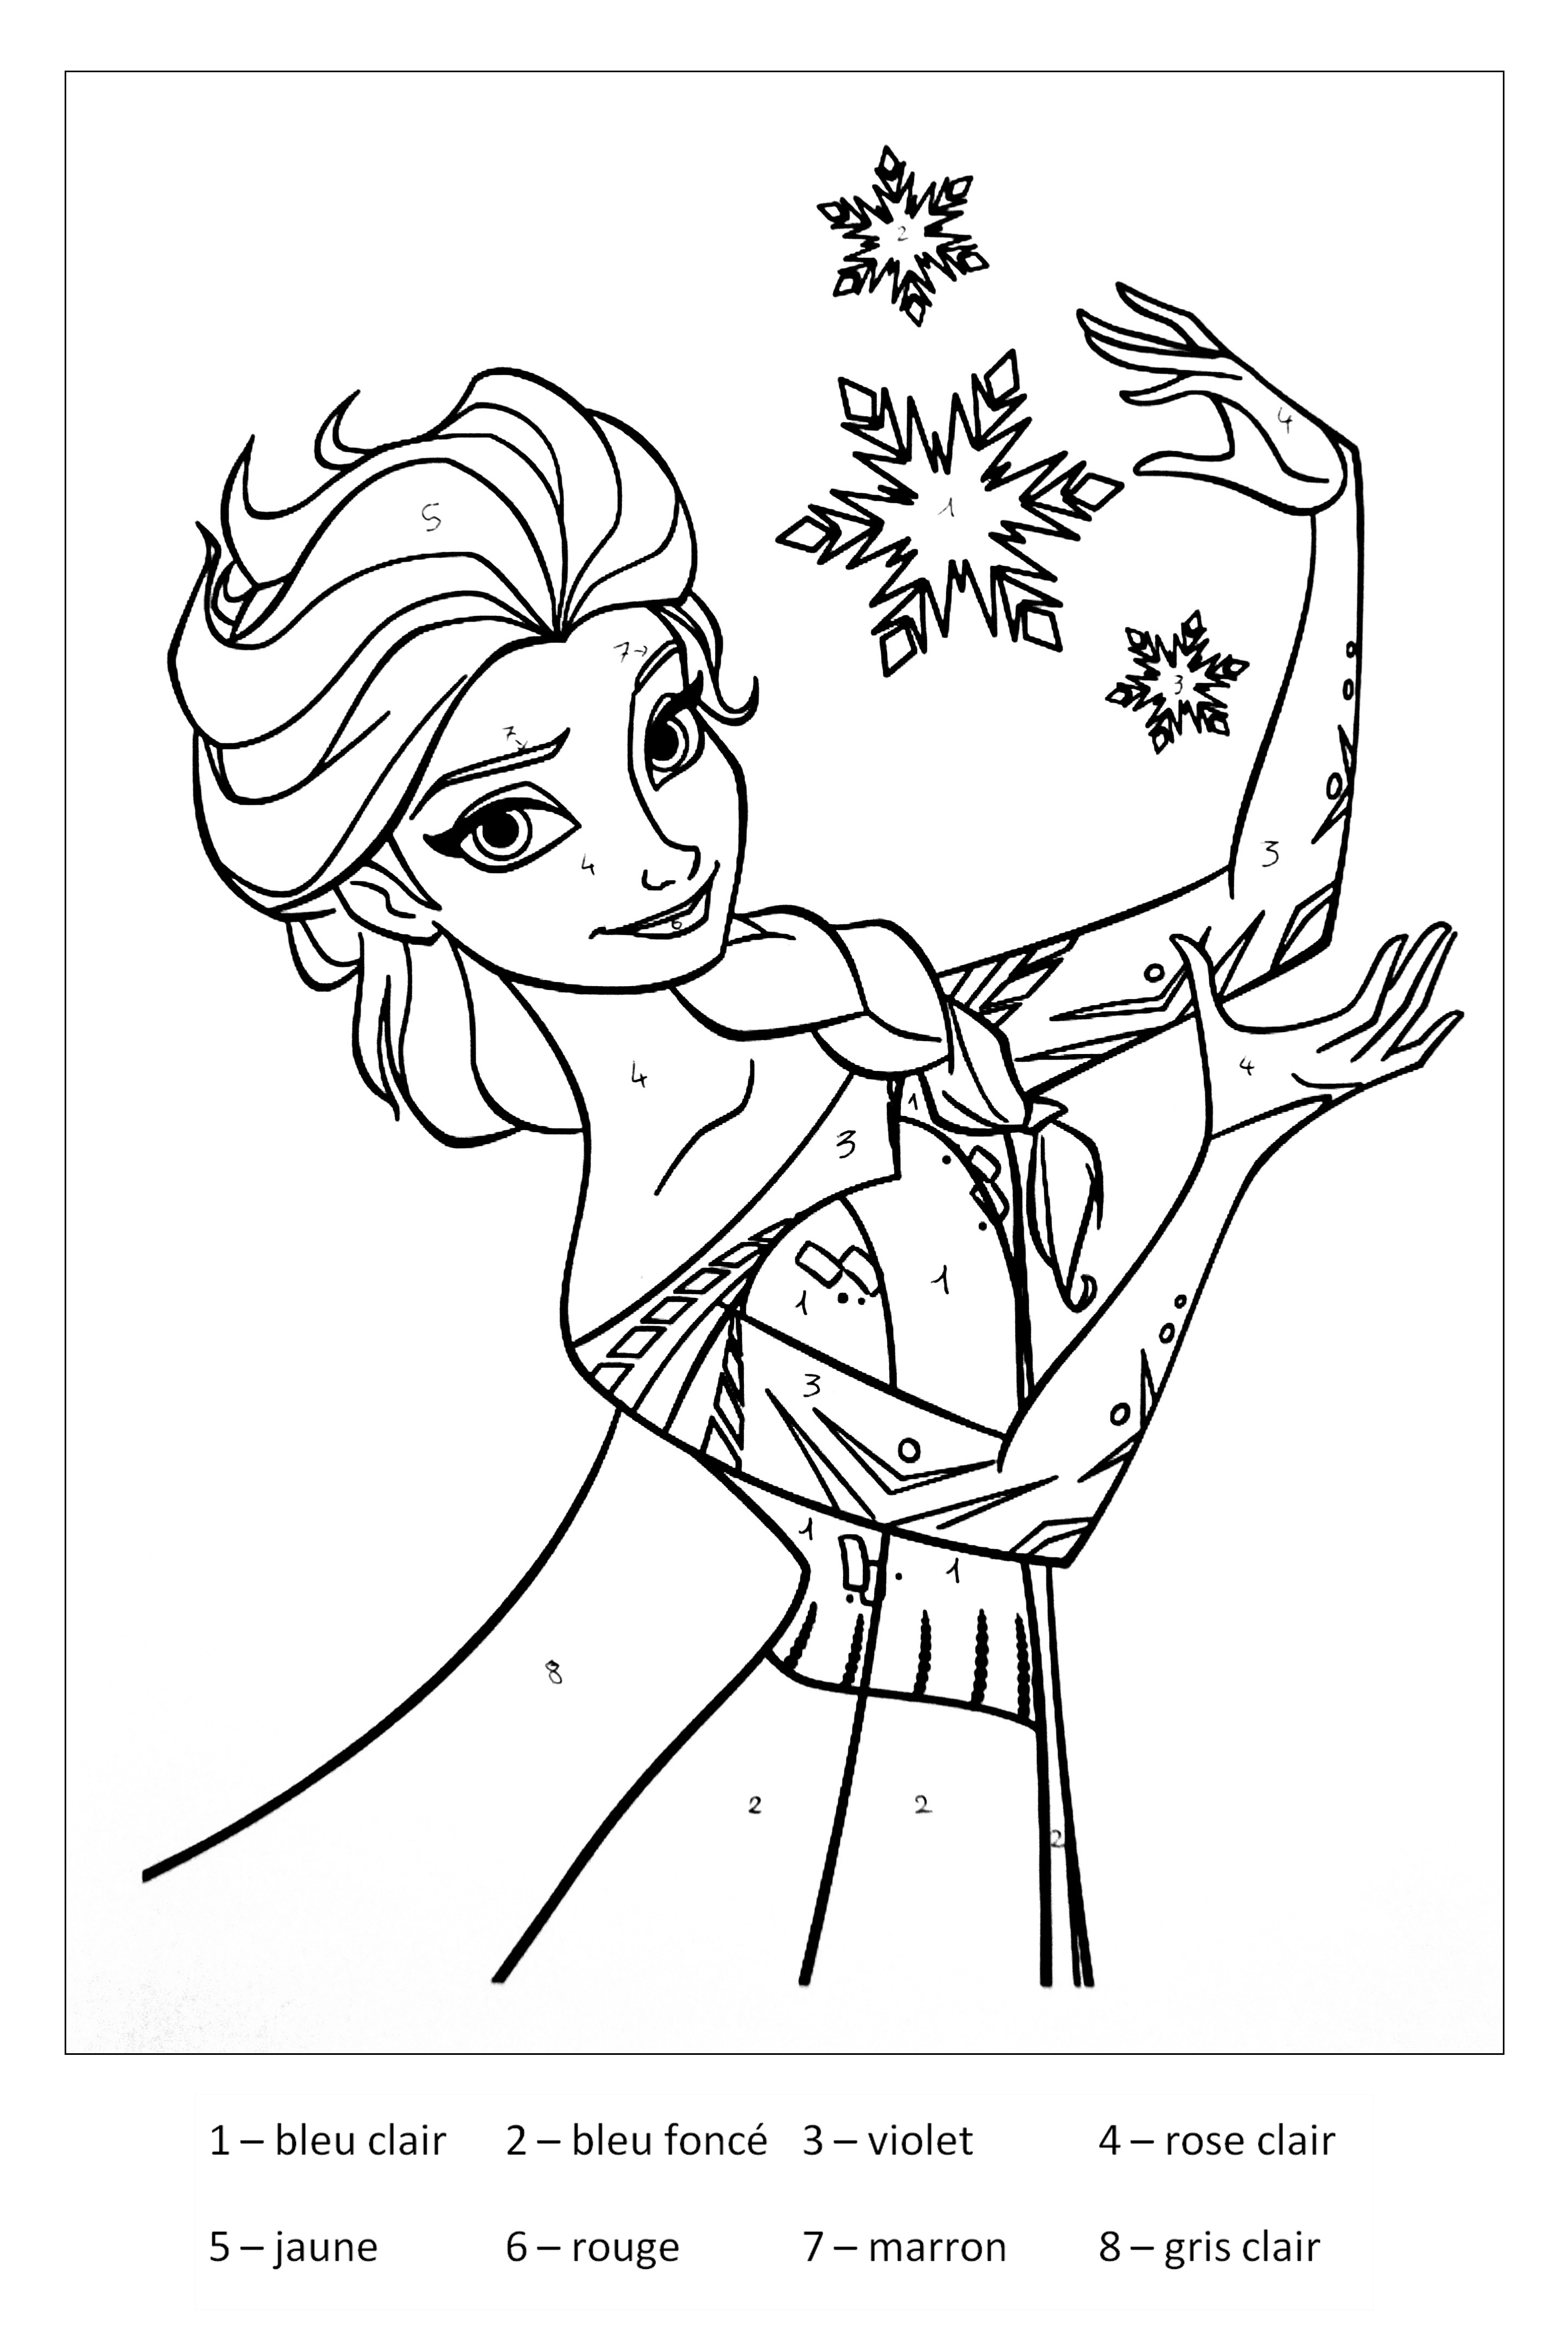 Dibujos para colorear de Elsa de Frozen para imprimir